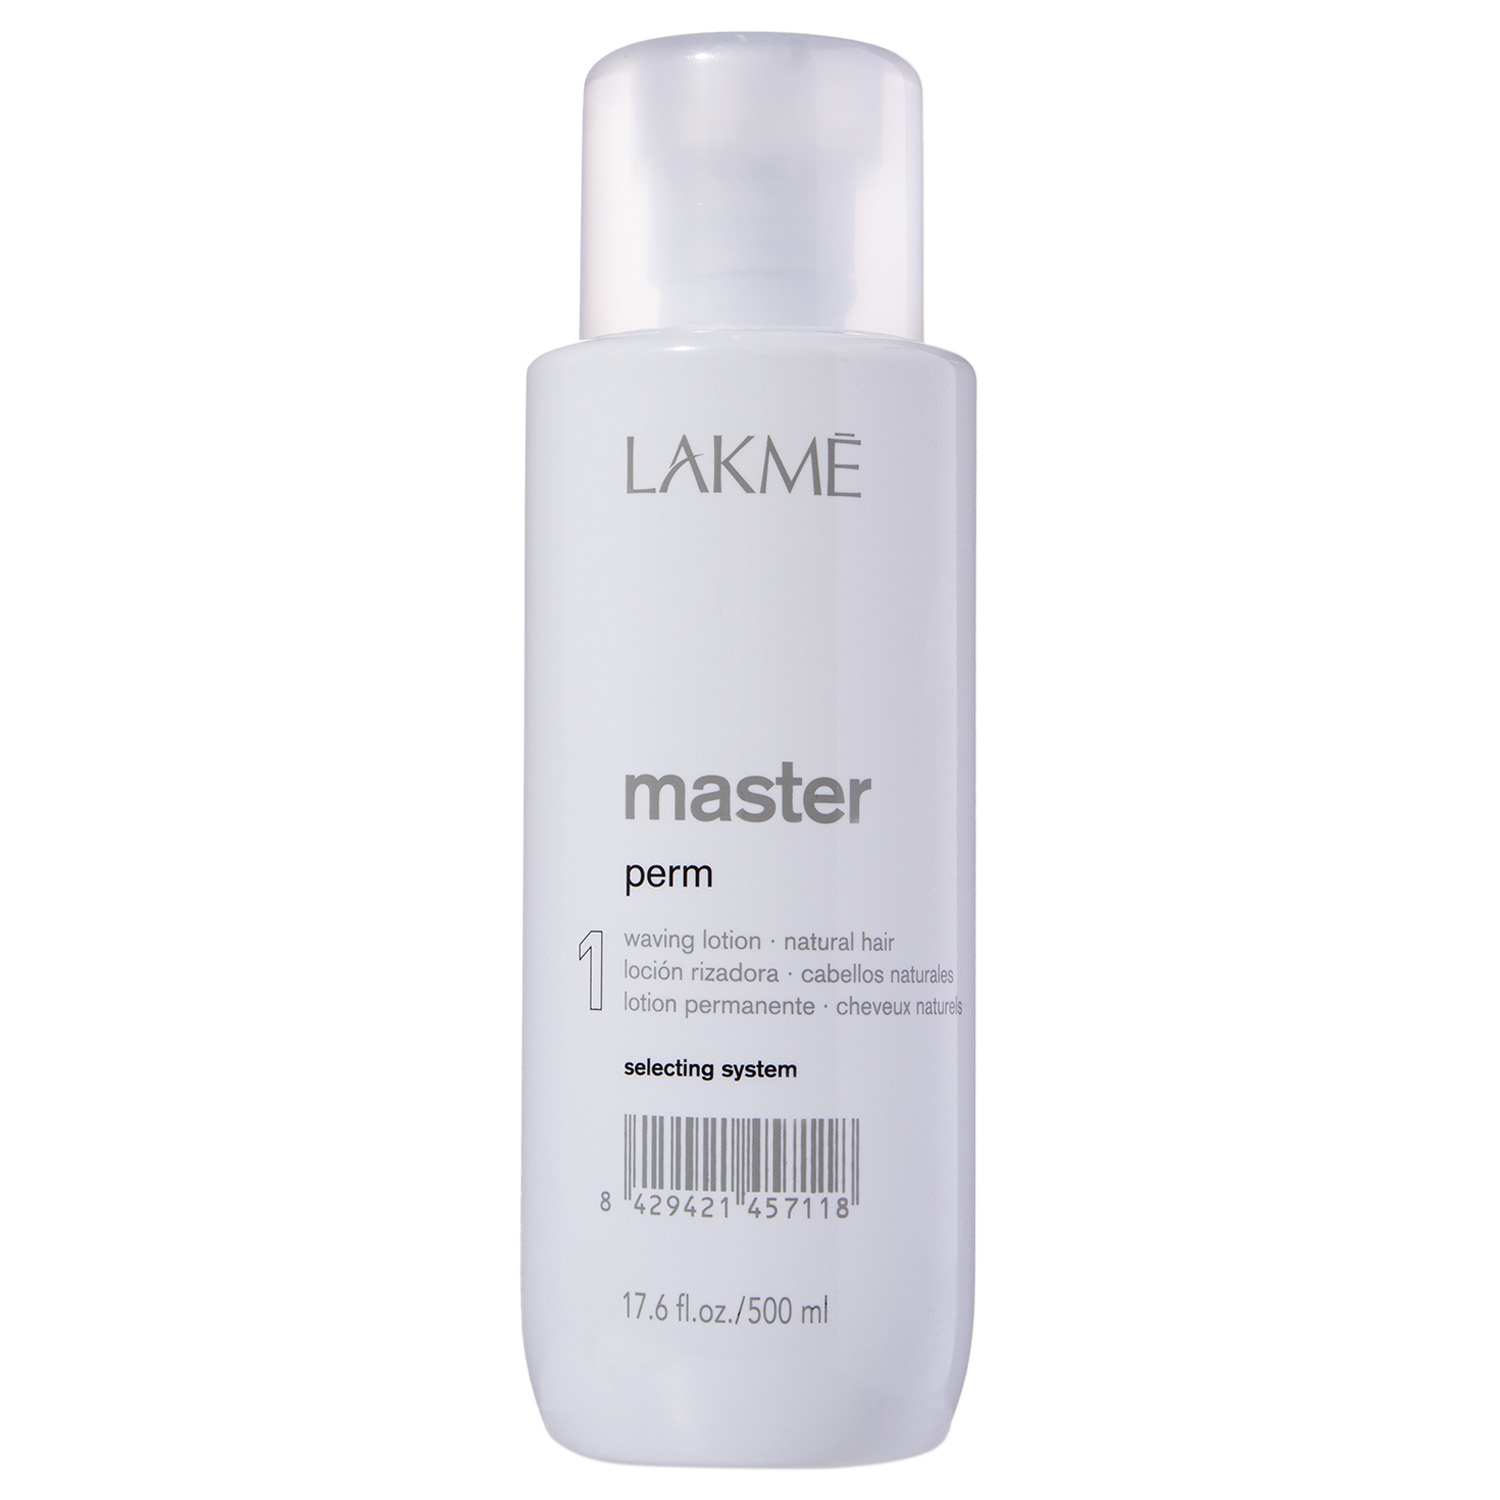 Lakme Лосьон для завивки нормальных волос 1 Perm Waving Lotion 1, 500 мл (Lakme, Master) lakme лосьон для завивки натуральных волос master perm waving lotion 1 500 мл